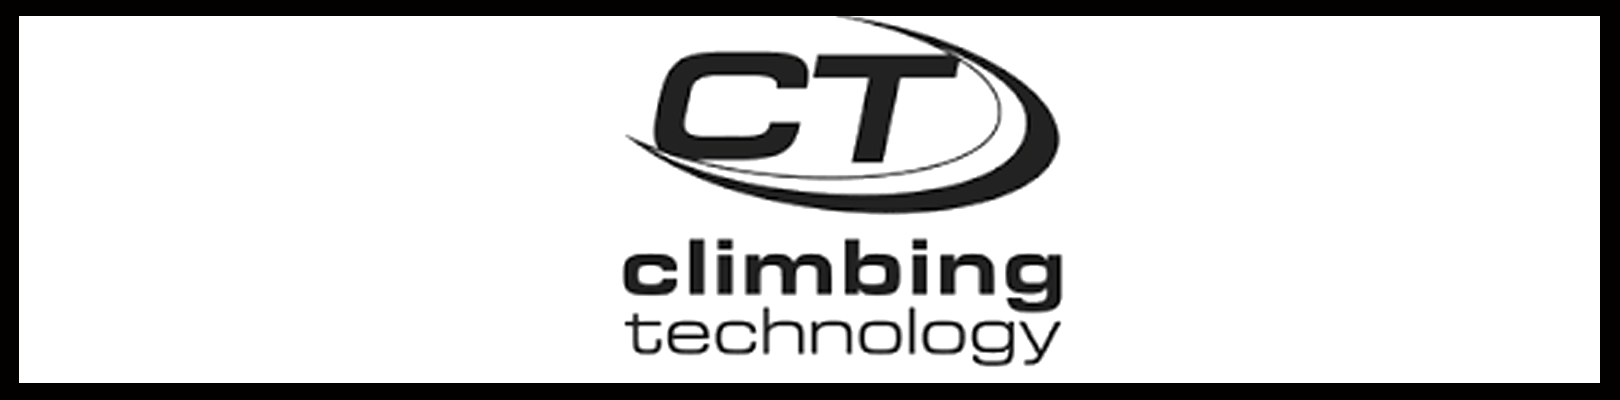 Climbing tecnhnology